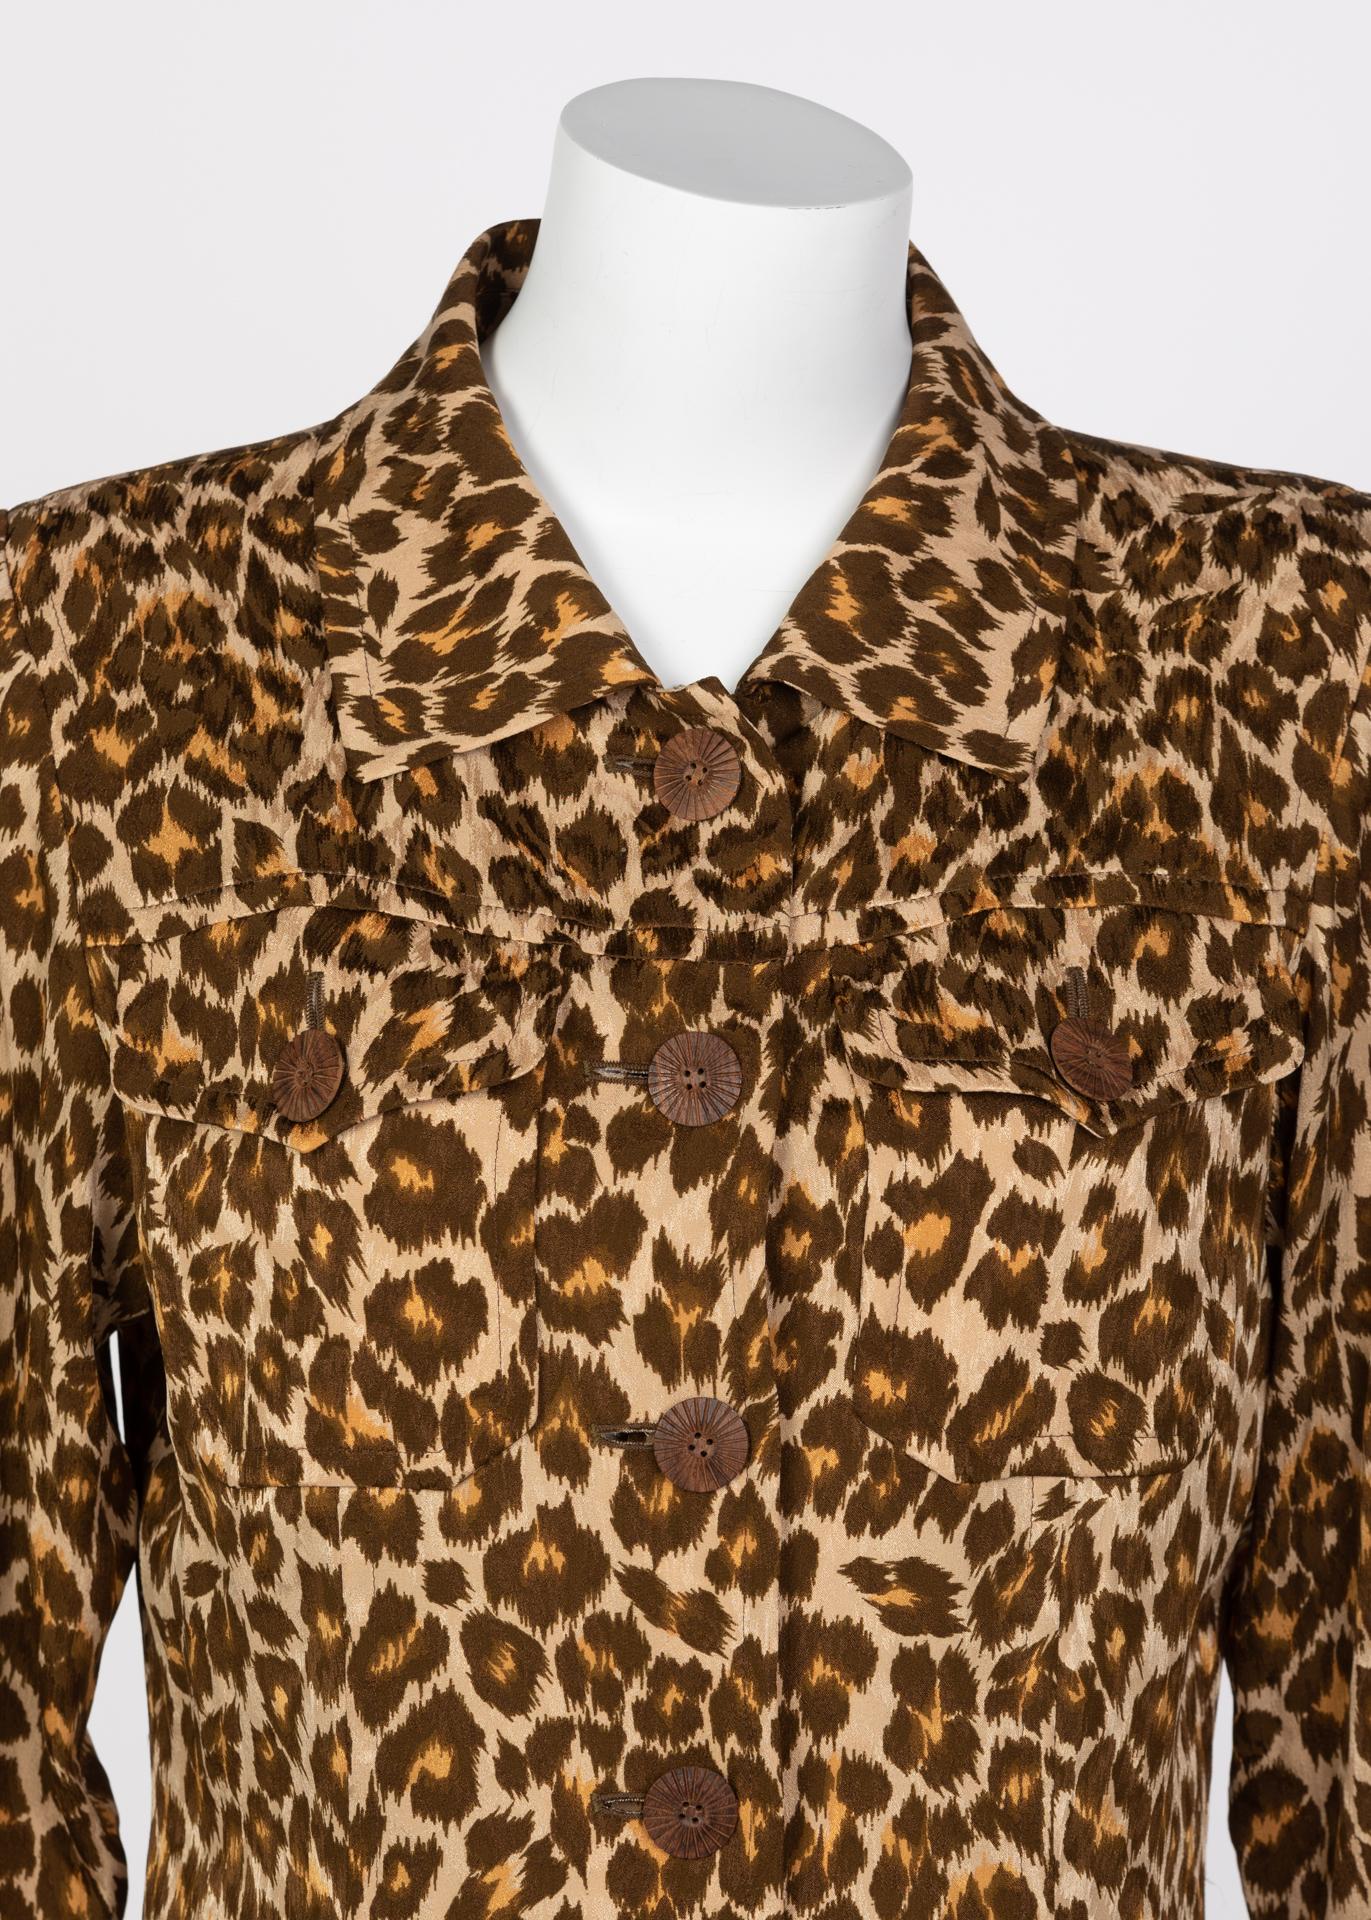 Yves Saint Laurent Leopard print Silk Damask Safari Top In Excellent Condition For Sale In Boca Raton, FL